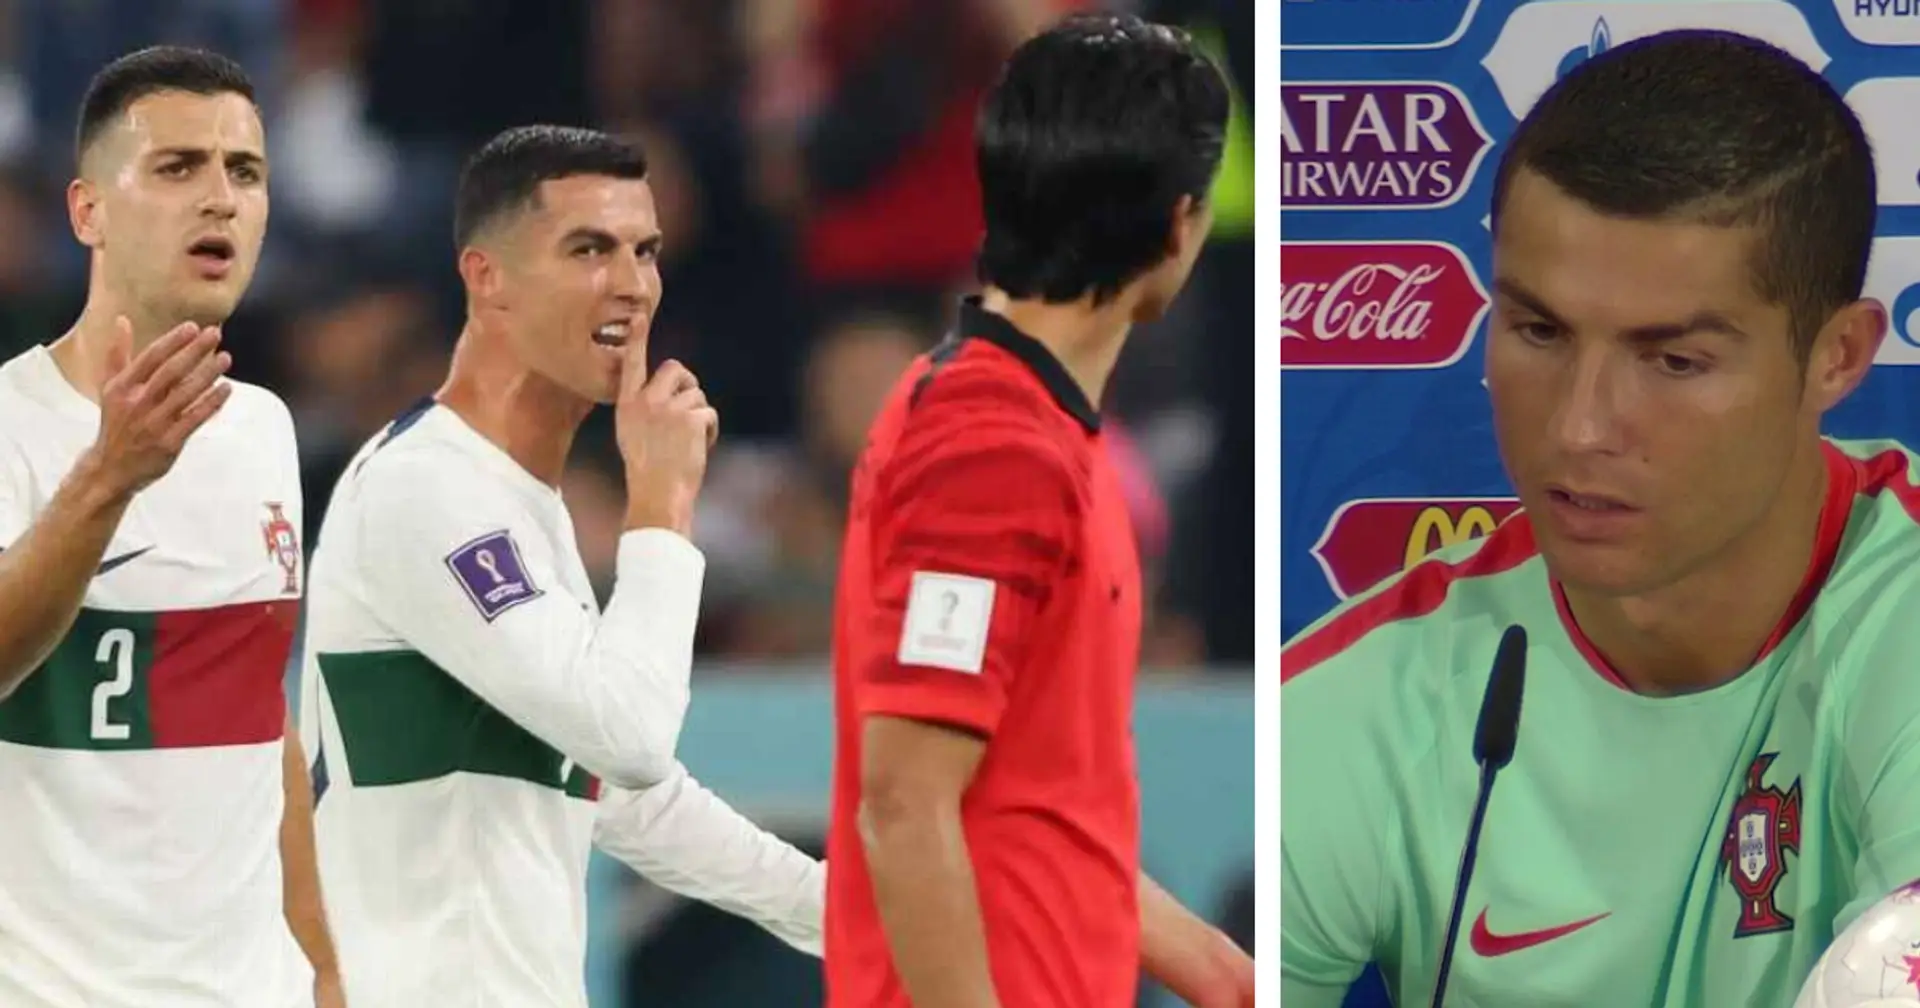 'I told him to shut up': Ronaldo explains spat with South Korean player